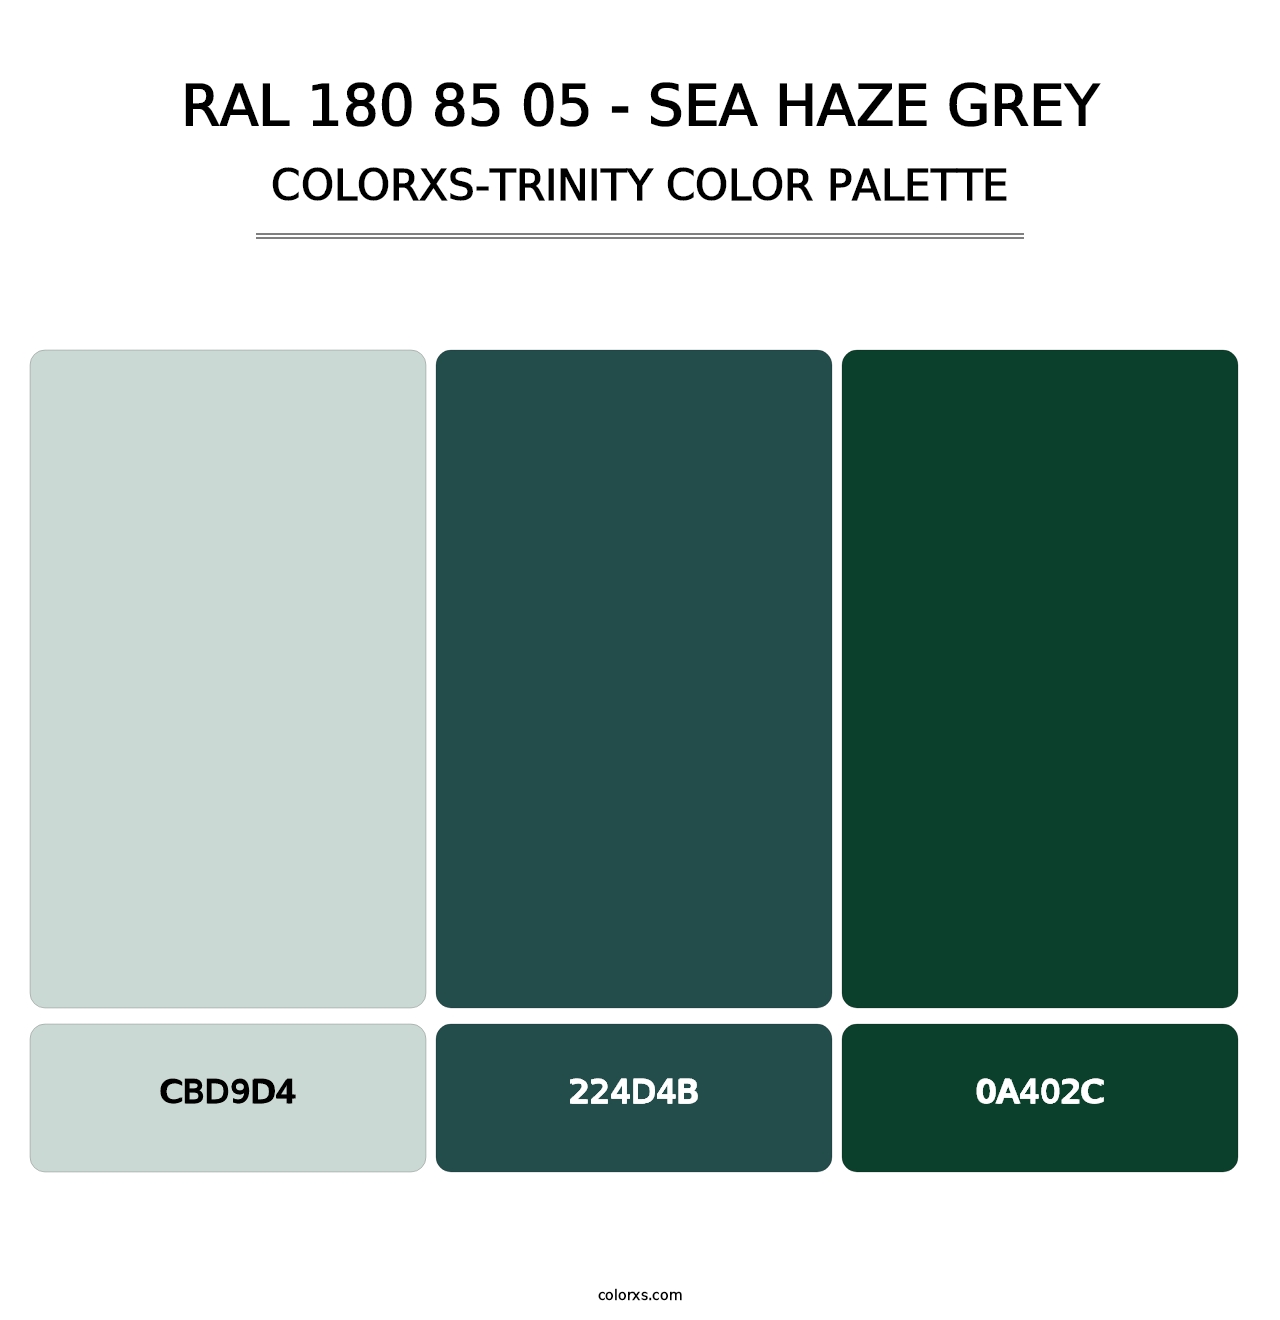 RAL 180 85 05 - Sea Haze Grey - Colorxs Trinity Palette